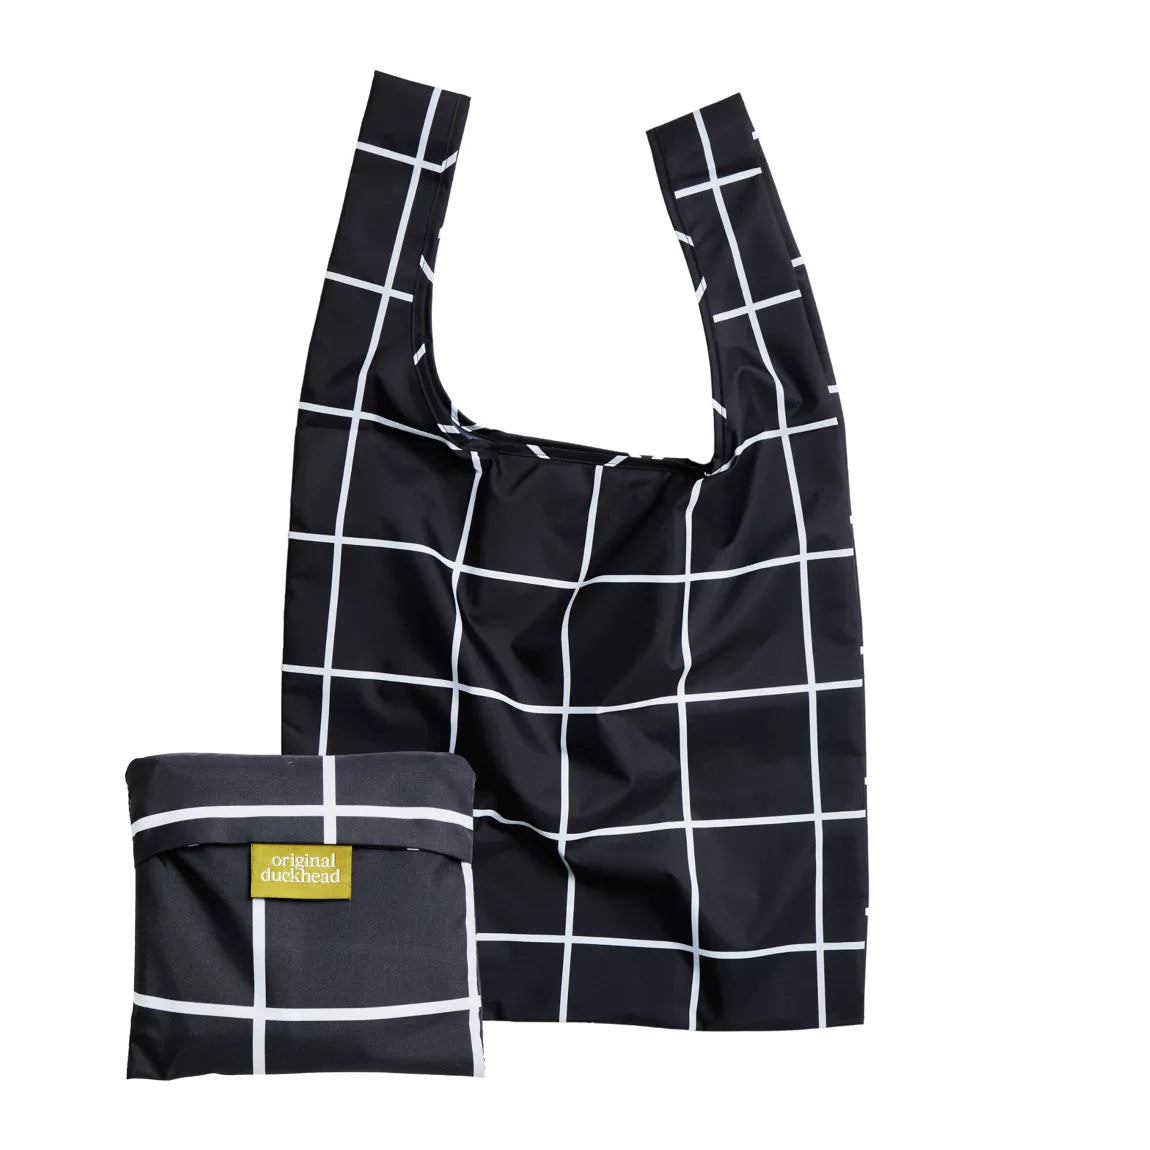 Black Grid Reusable Bag By Original Duckhead